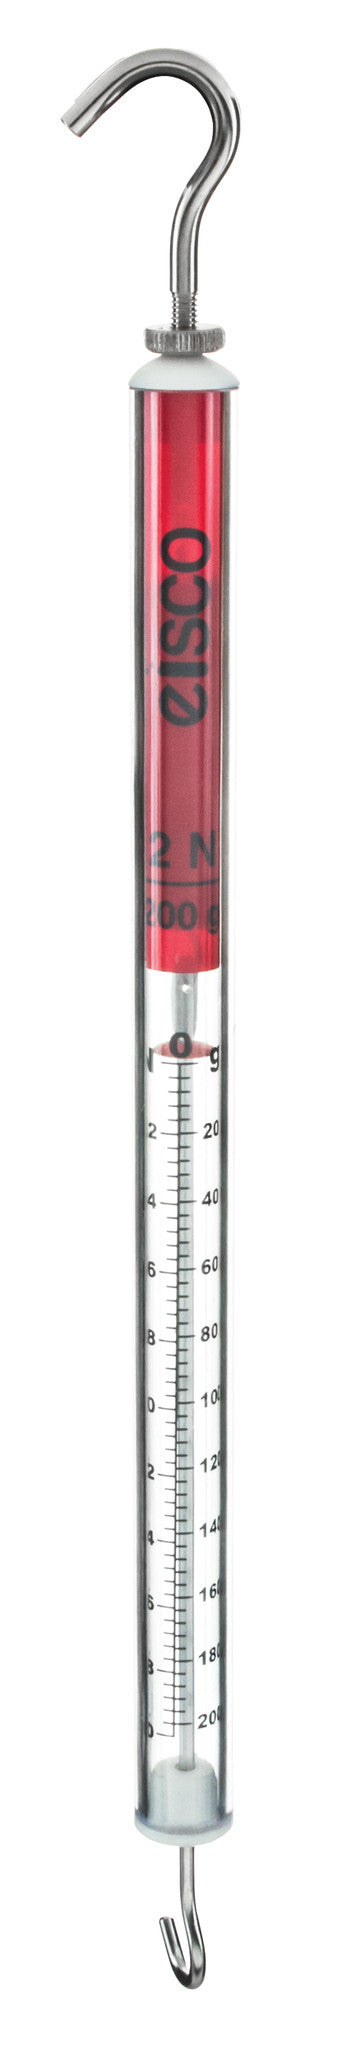 Dynamometer - Premium Range, 2N / 200g